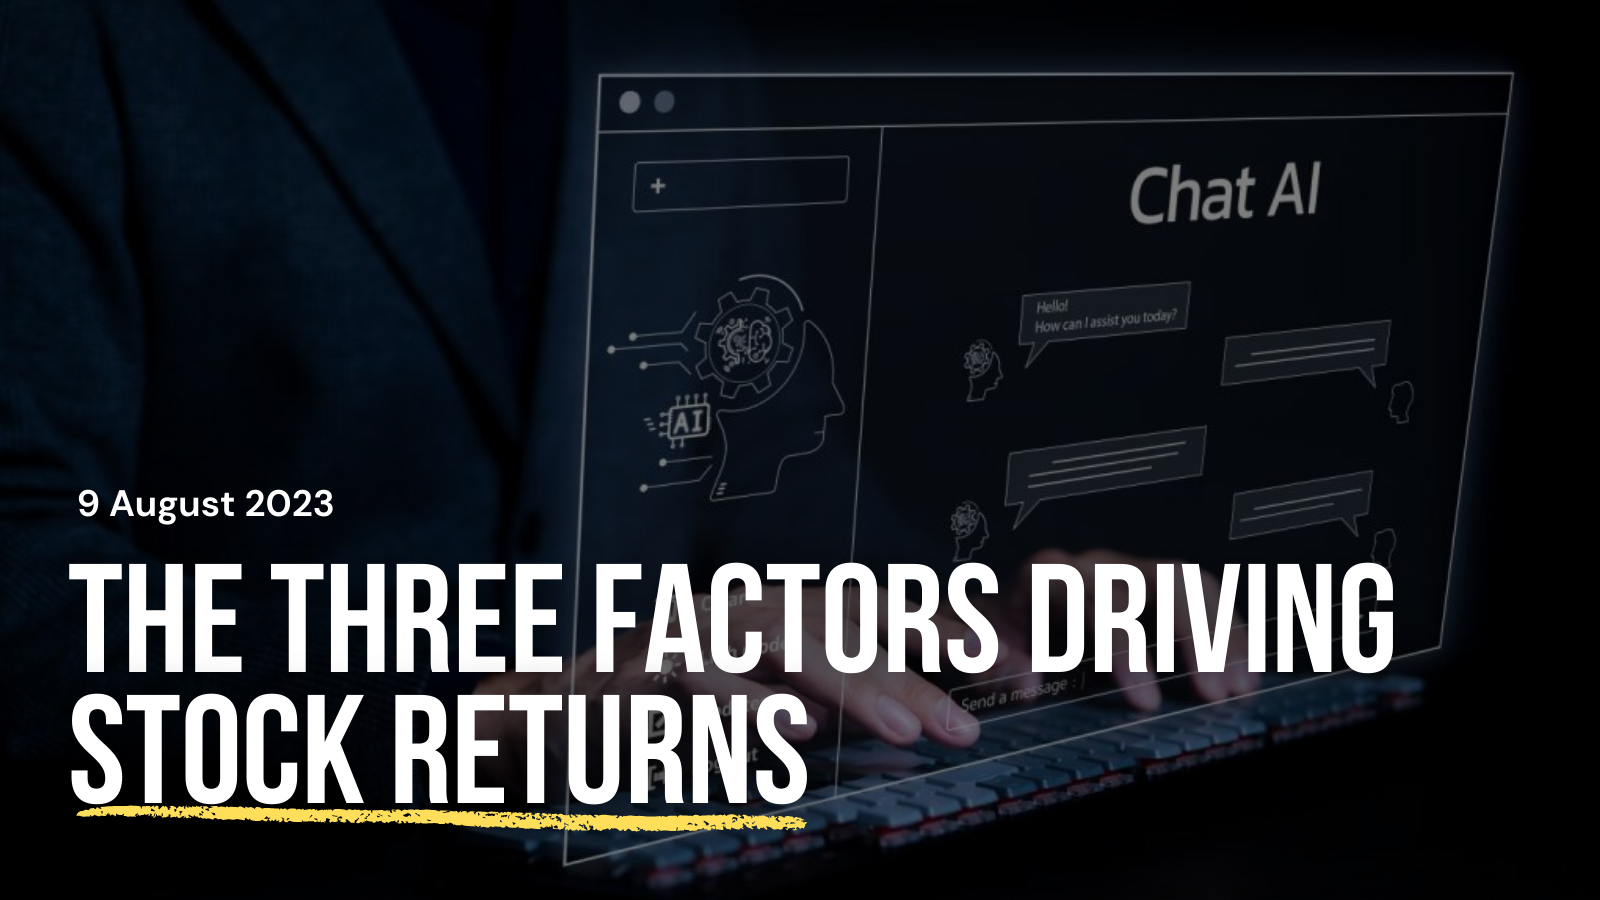 1. three factors driving stock returns